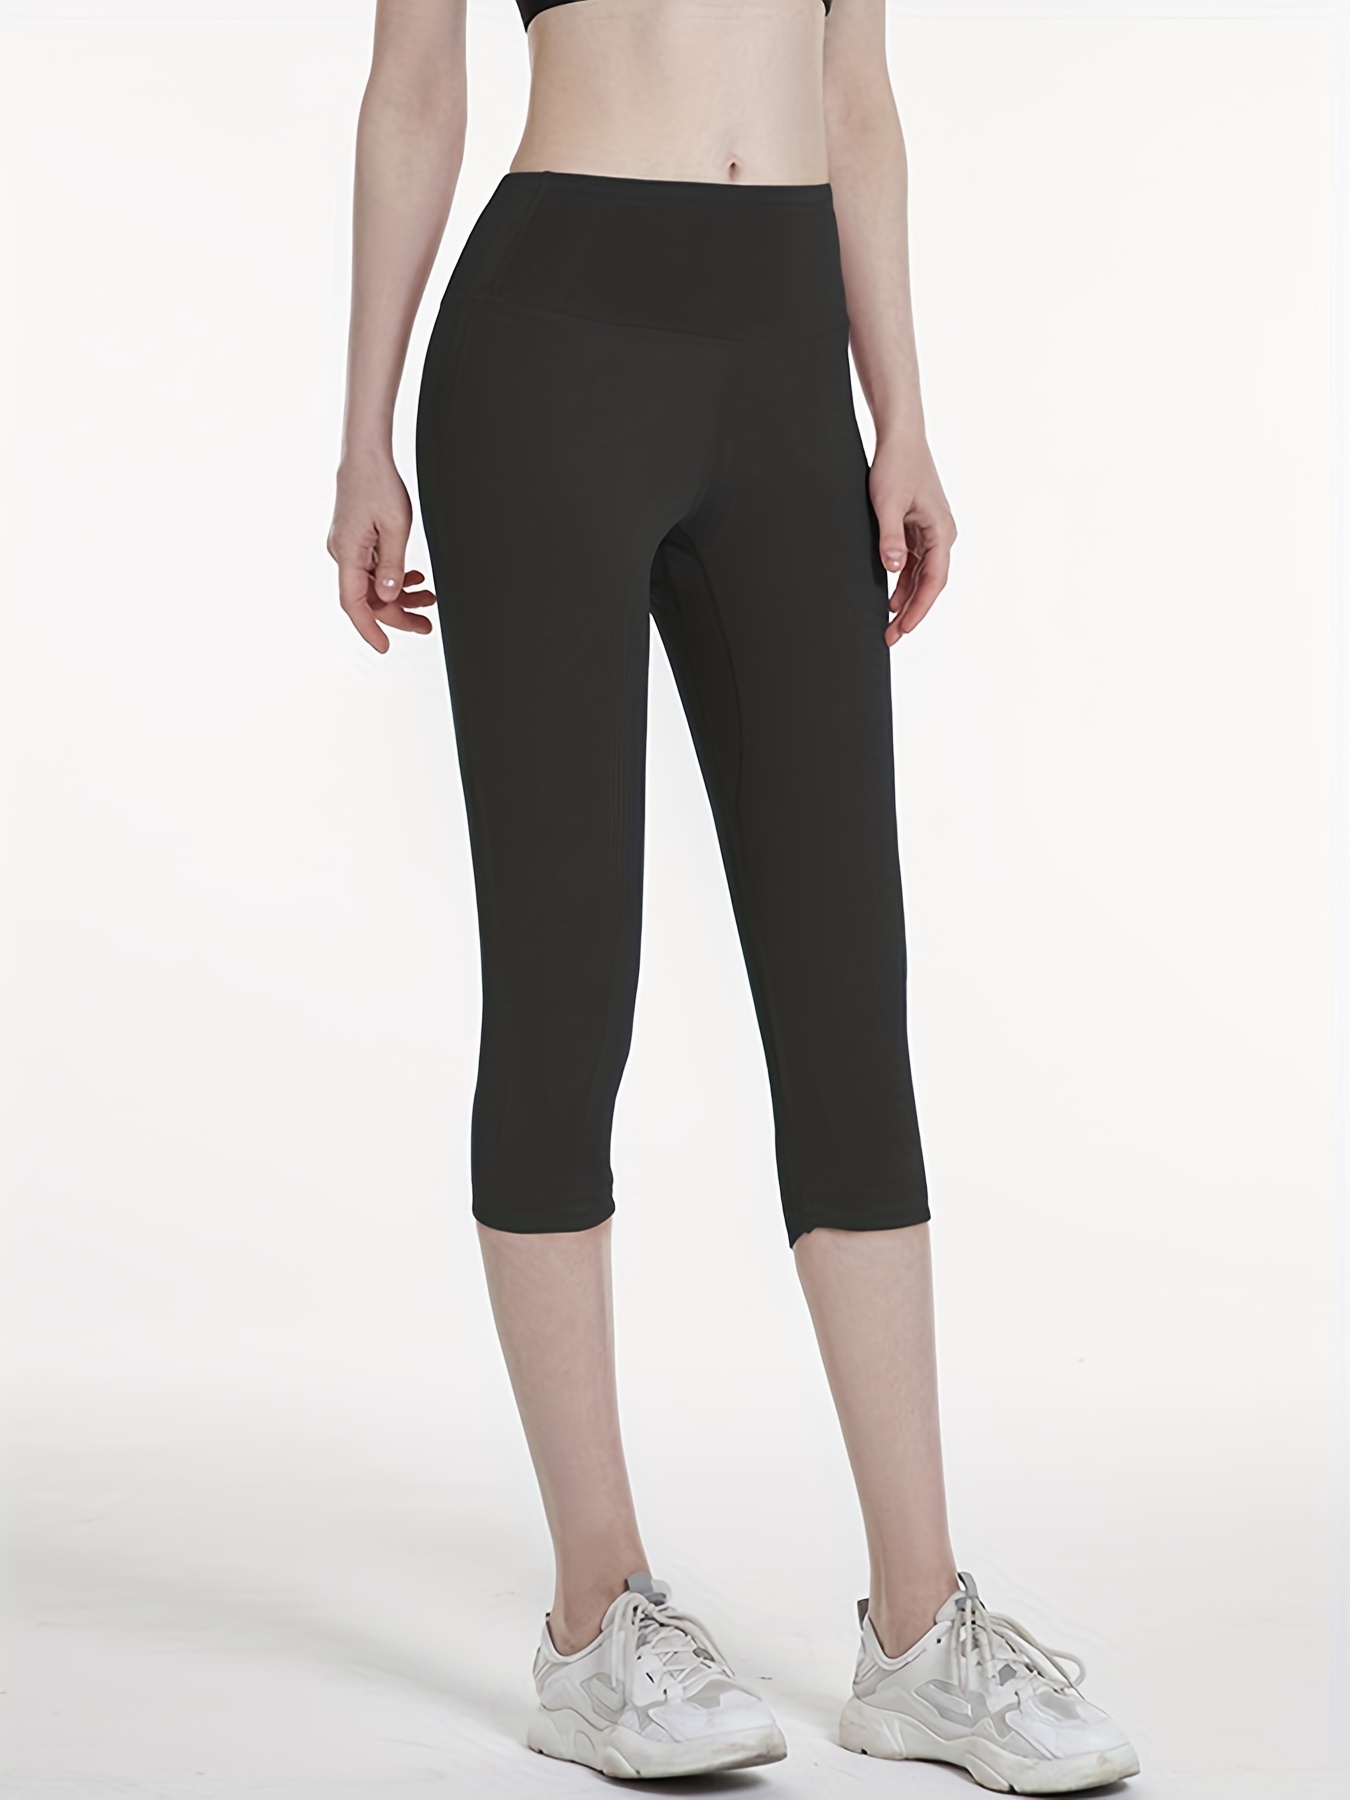 TSLA Women's Yoga Pants with Hidden/Side Pocket, Lightweight Workout  Running Tights, Capri 4-Way Stretch Leggings